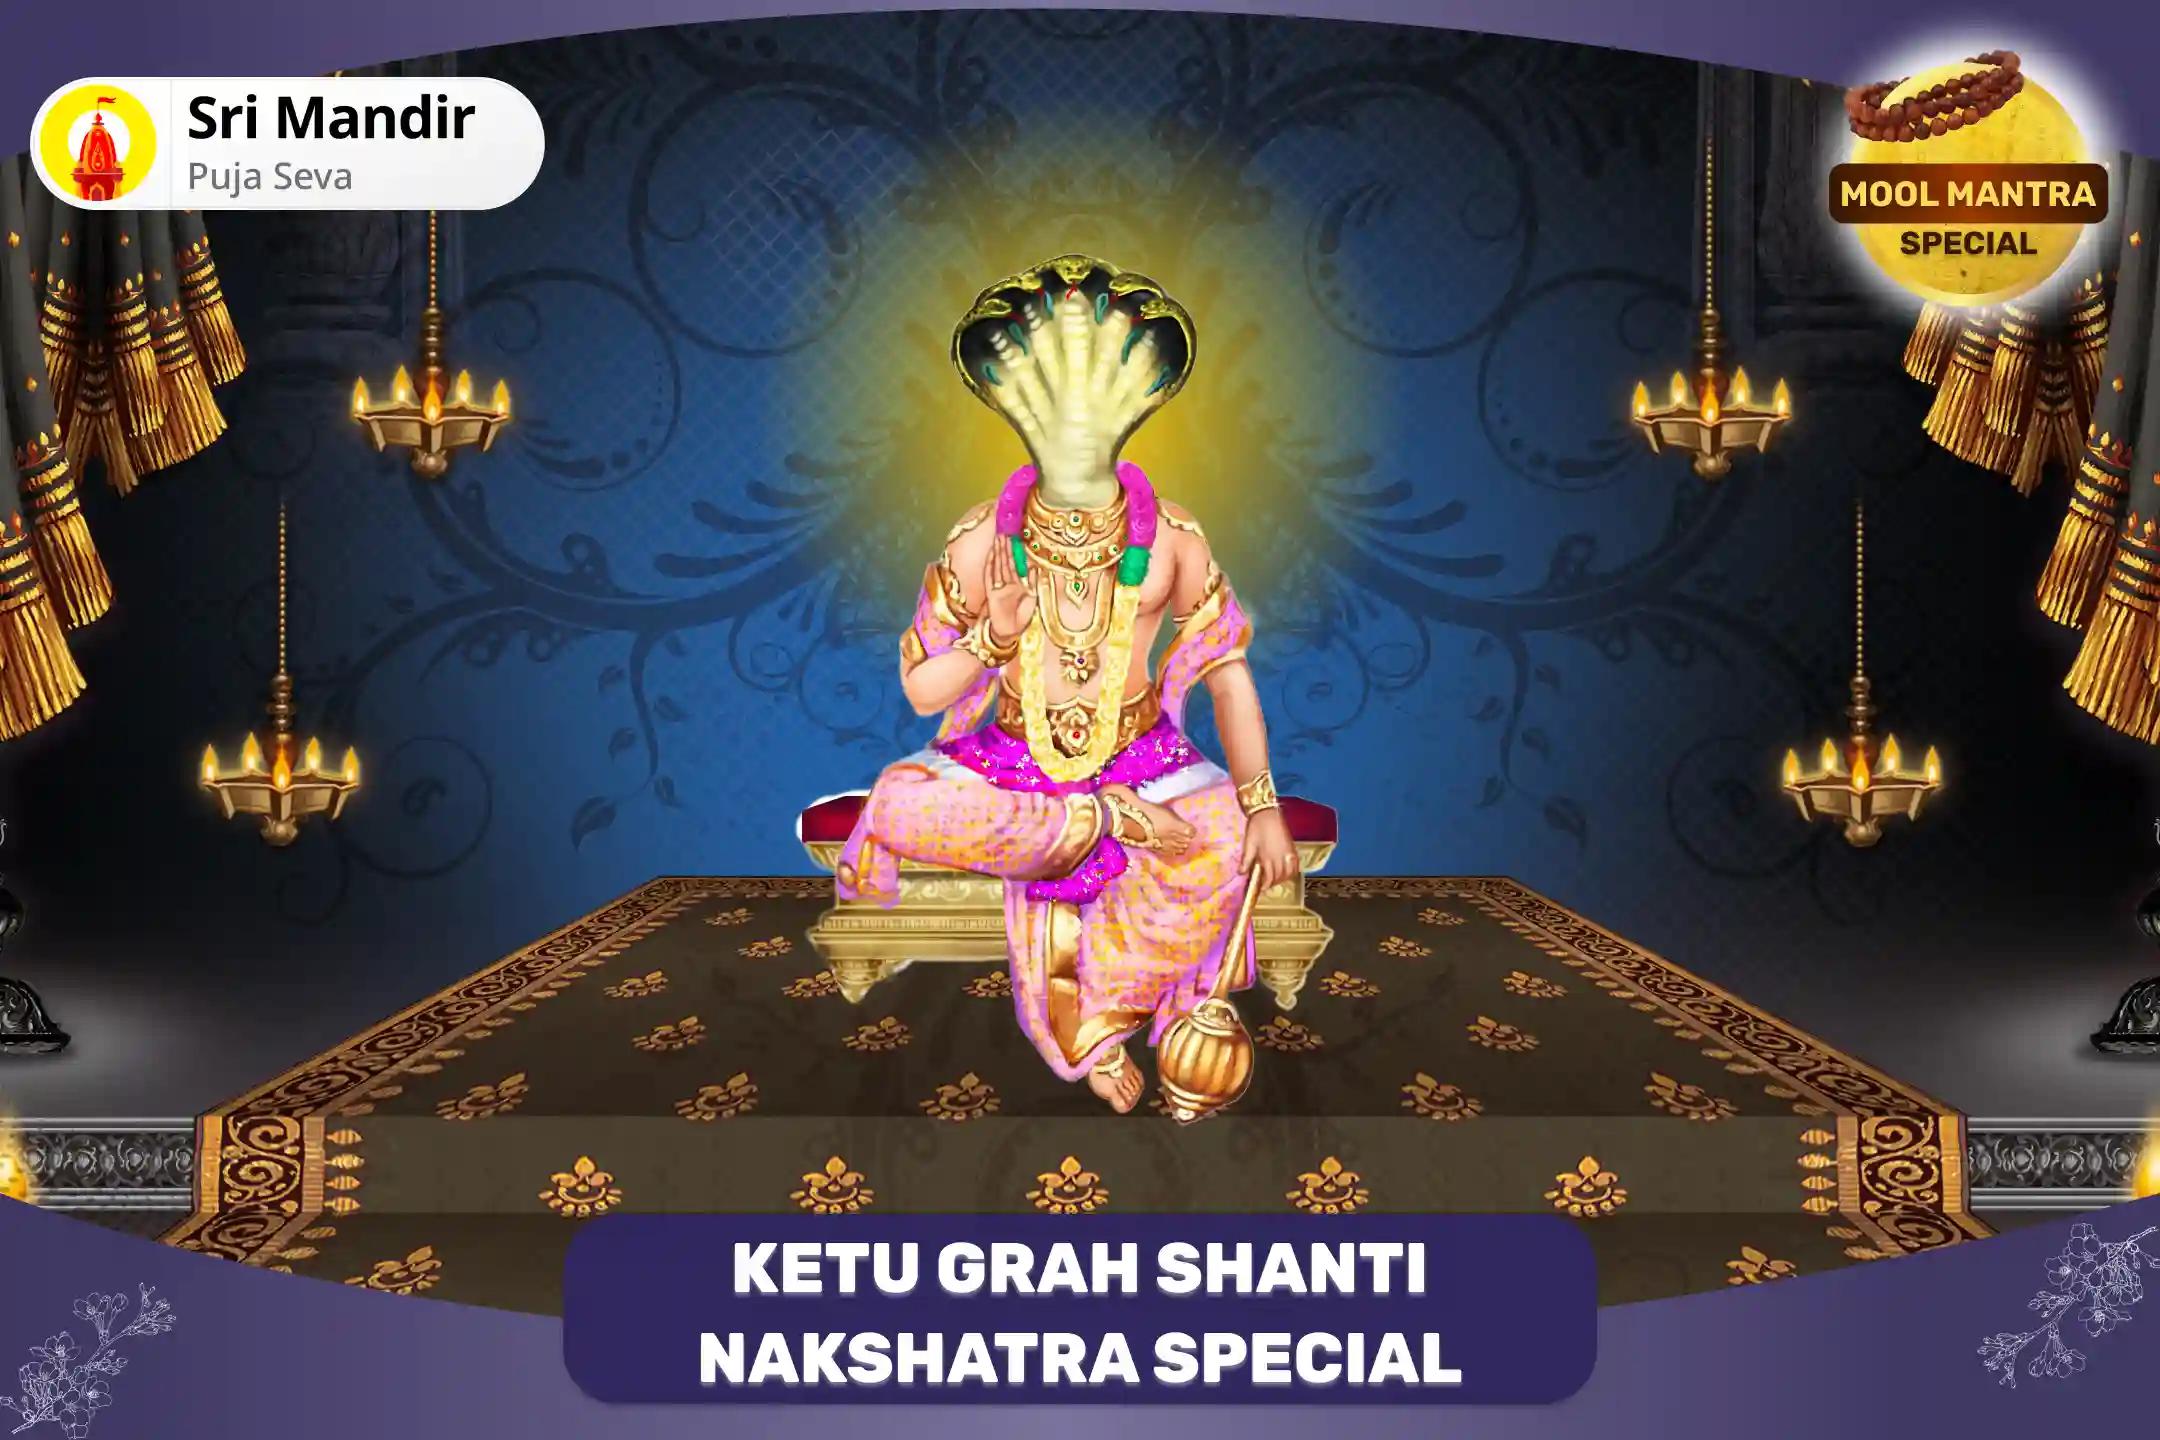 Ketu Grah Shanti Nakshatra Special 7000 Ketu Mool Mantra jaap and Yagya to Overcome Stagnancy and Find Growth in Life 